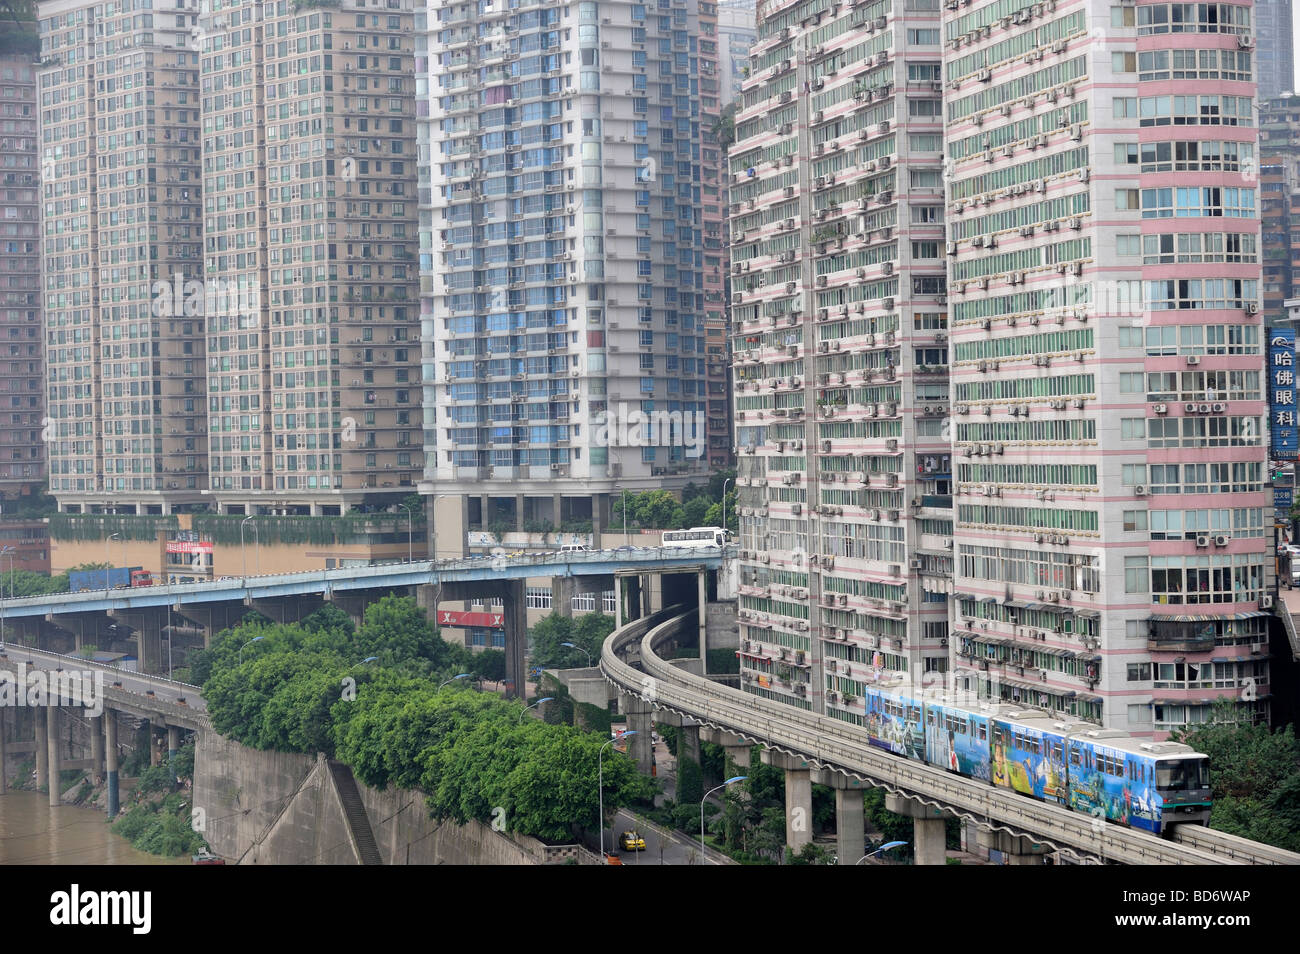 Chongqing metro train across high density apartments. 02-Aug-2009 Stock Photo